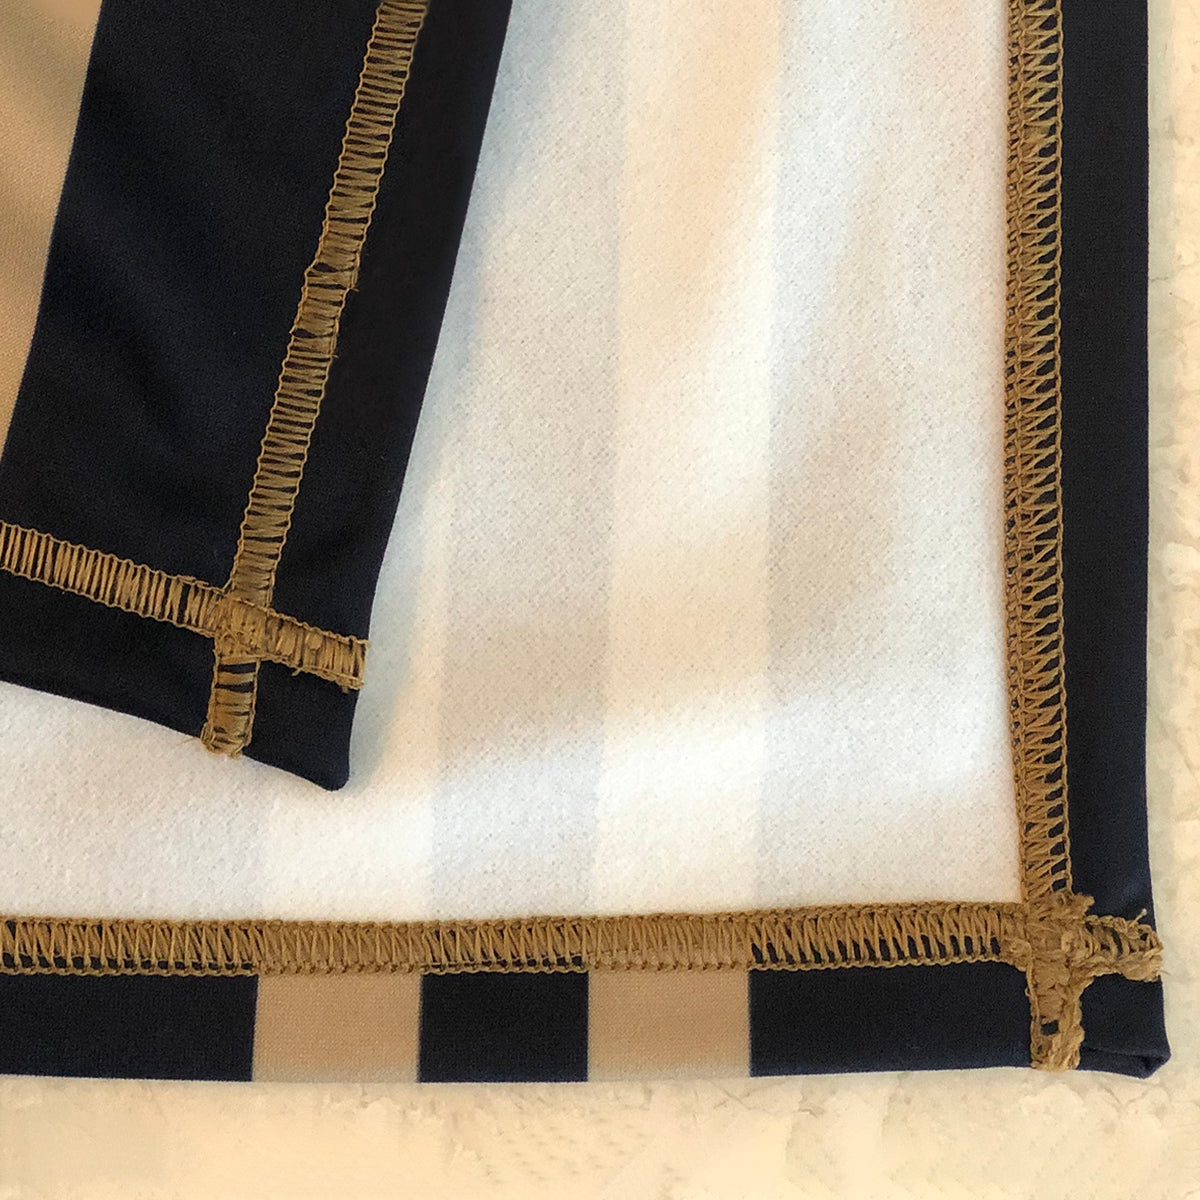 Morehead State Eagles Game Day Soft Premium Fleece Royal Throw Blanket 40 x 58 Logo and Stripes